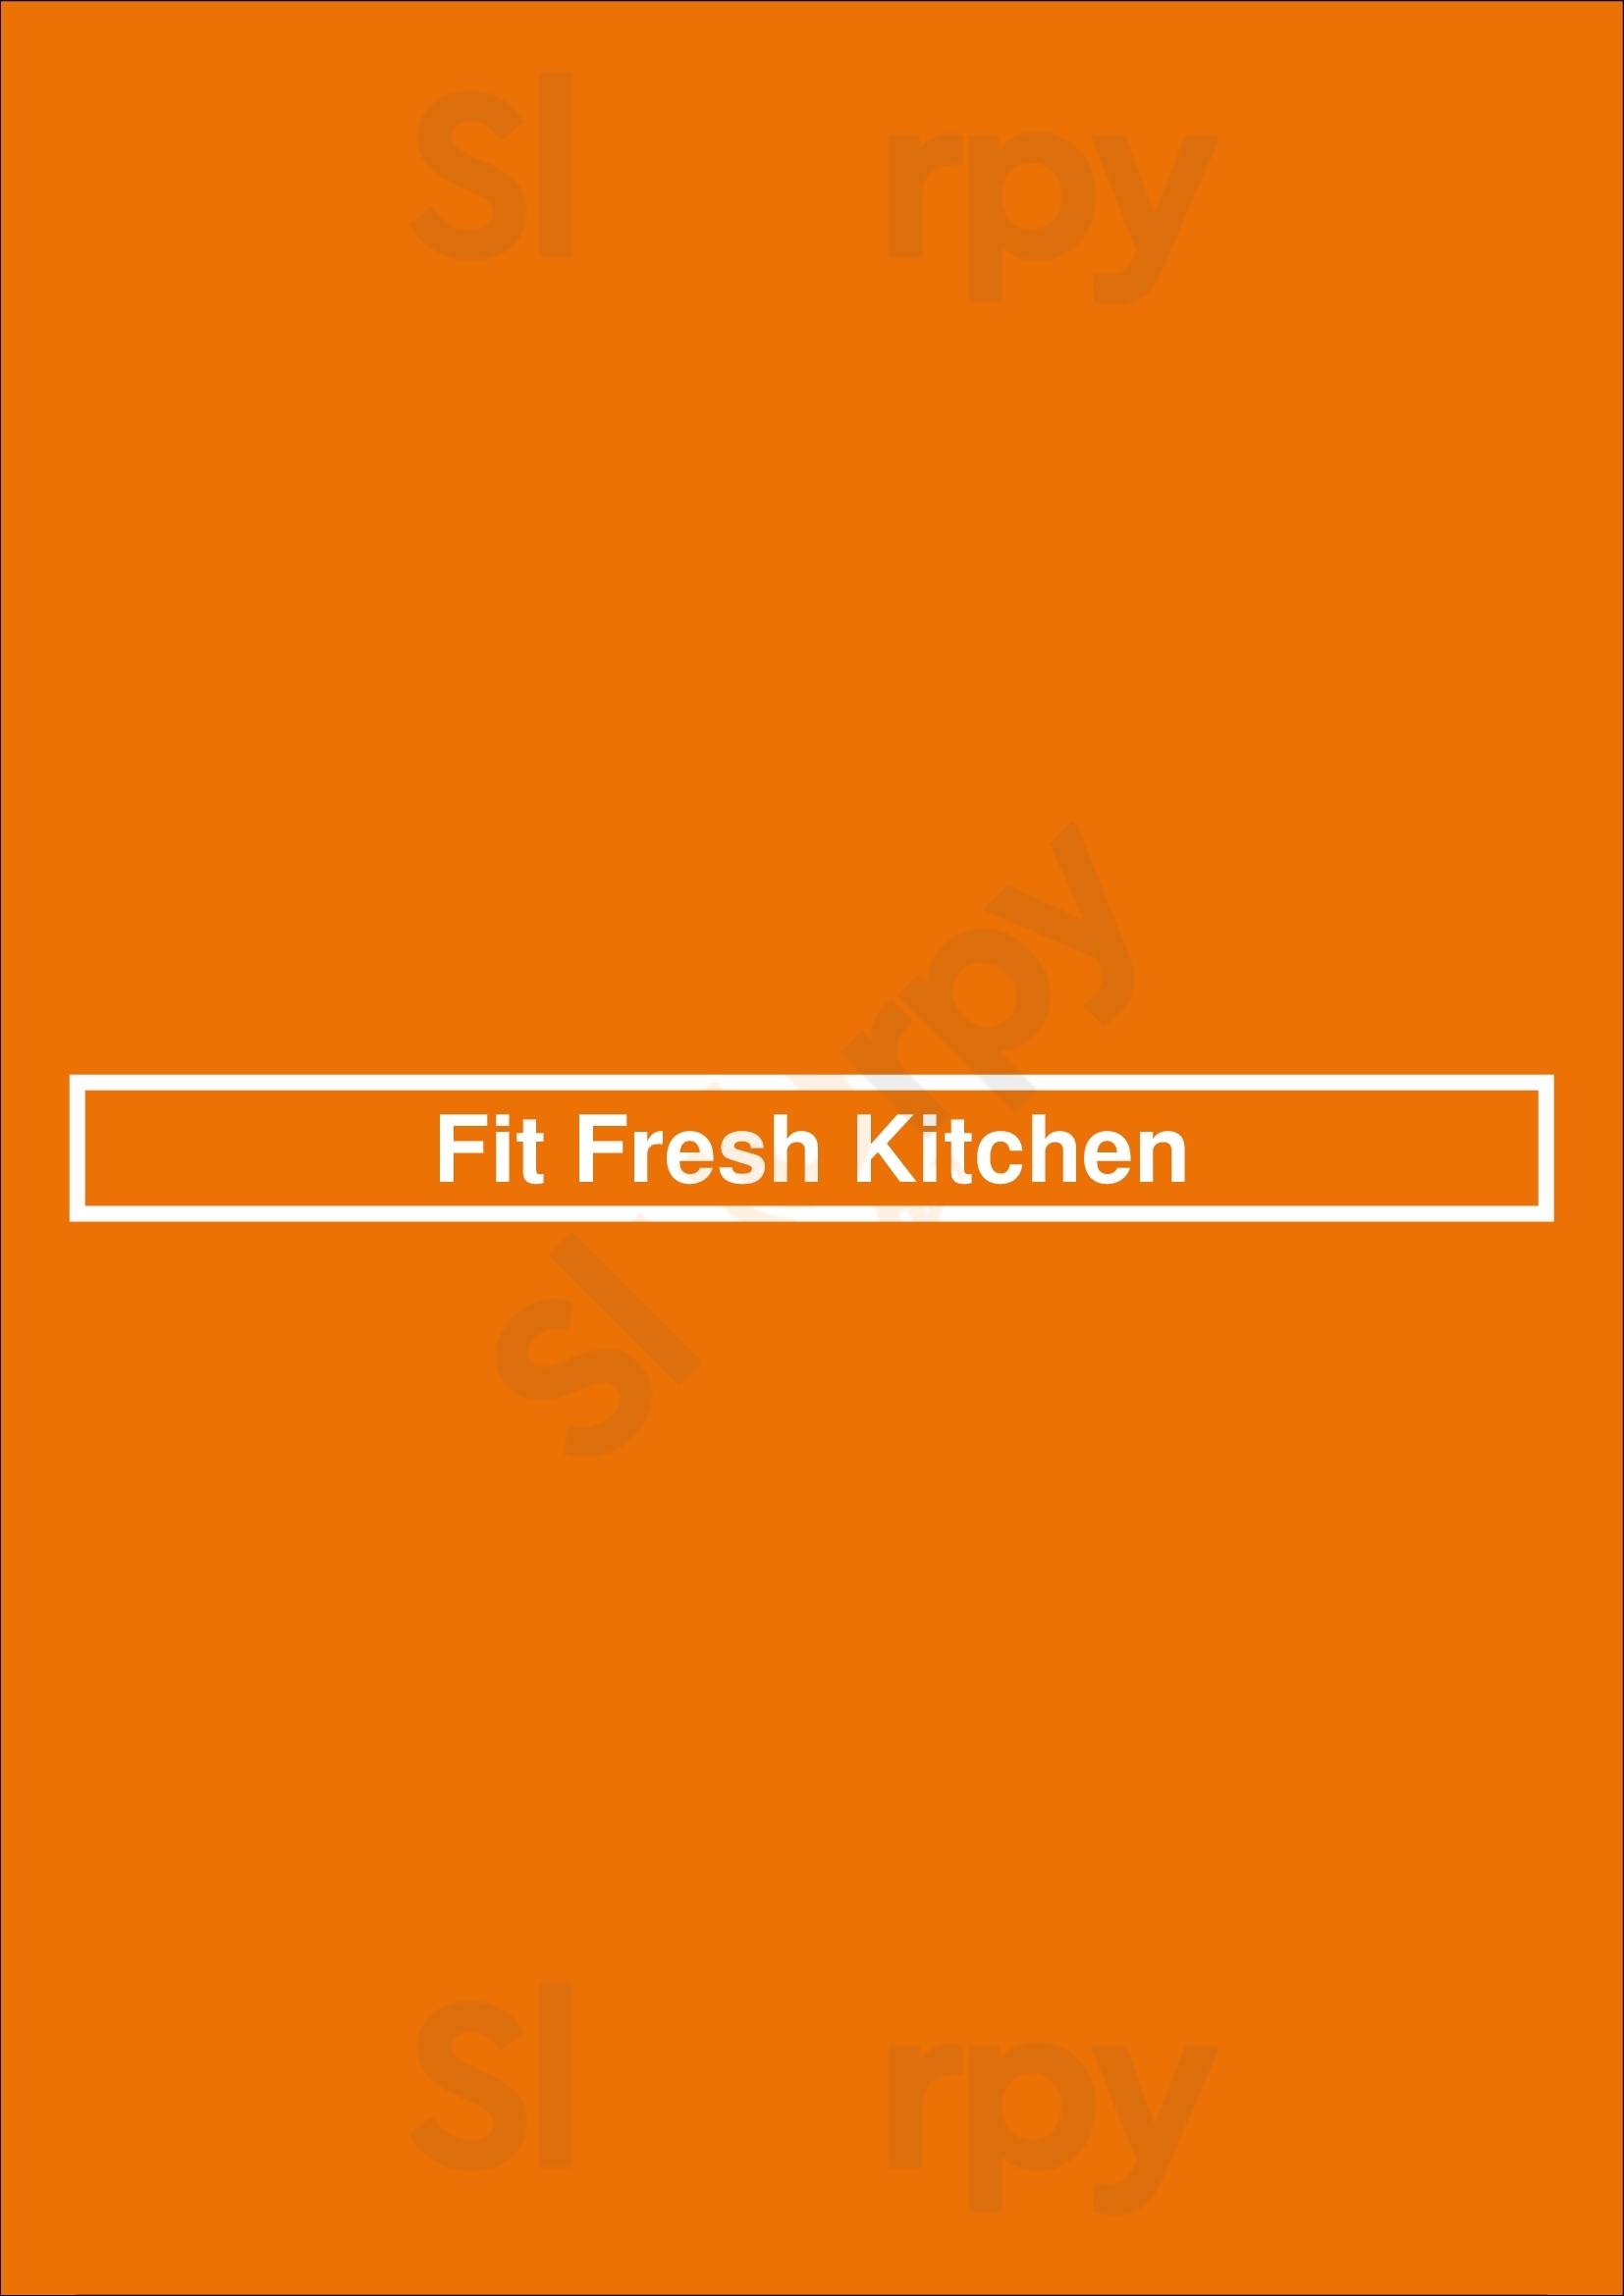 Fit Fresh Kitchen Charlotte Menu - 1